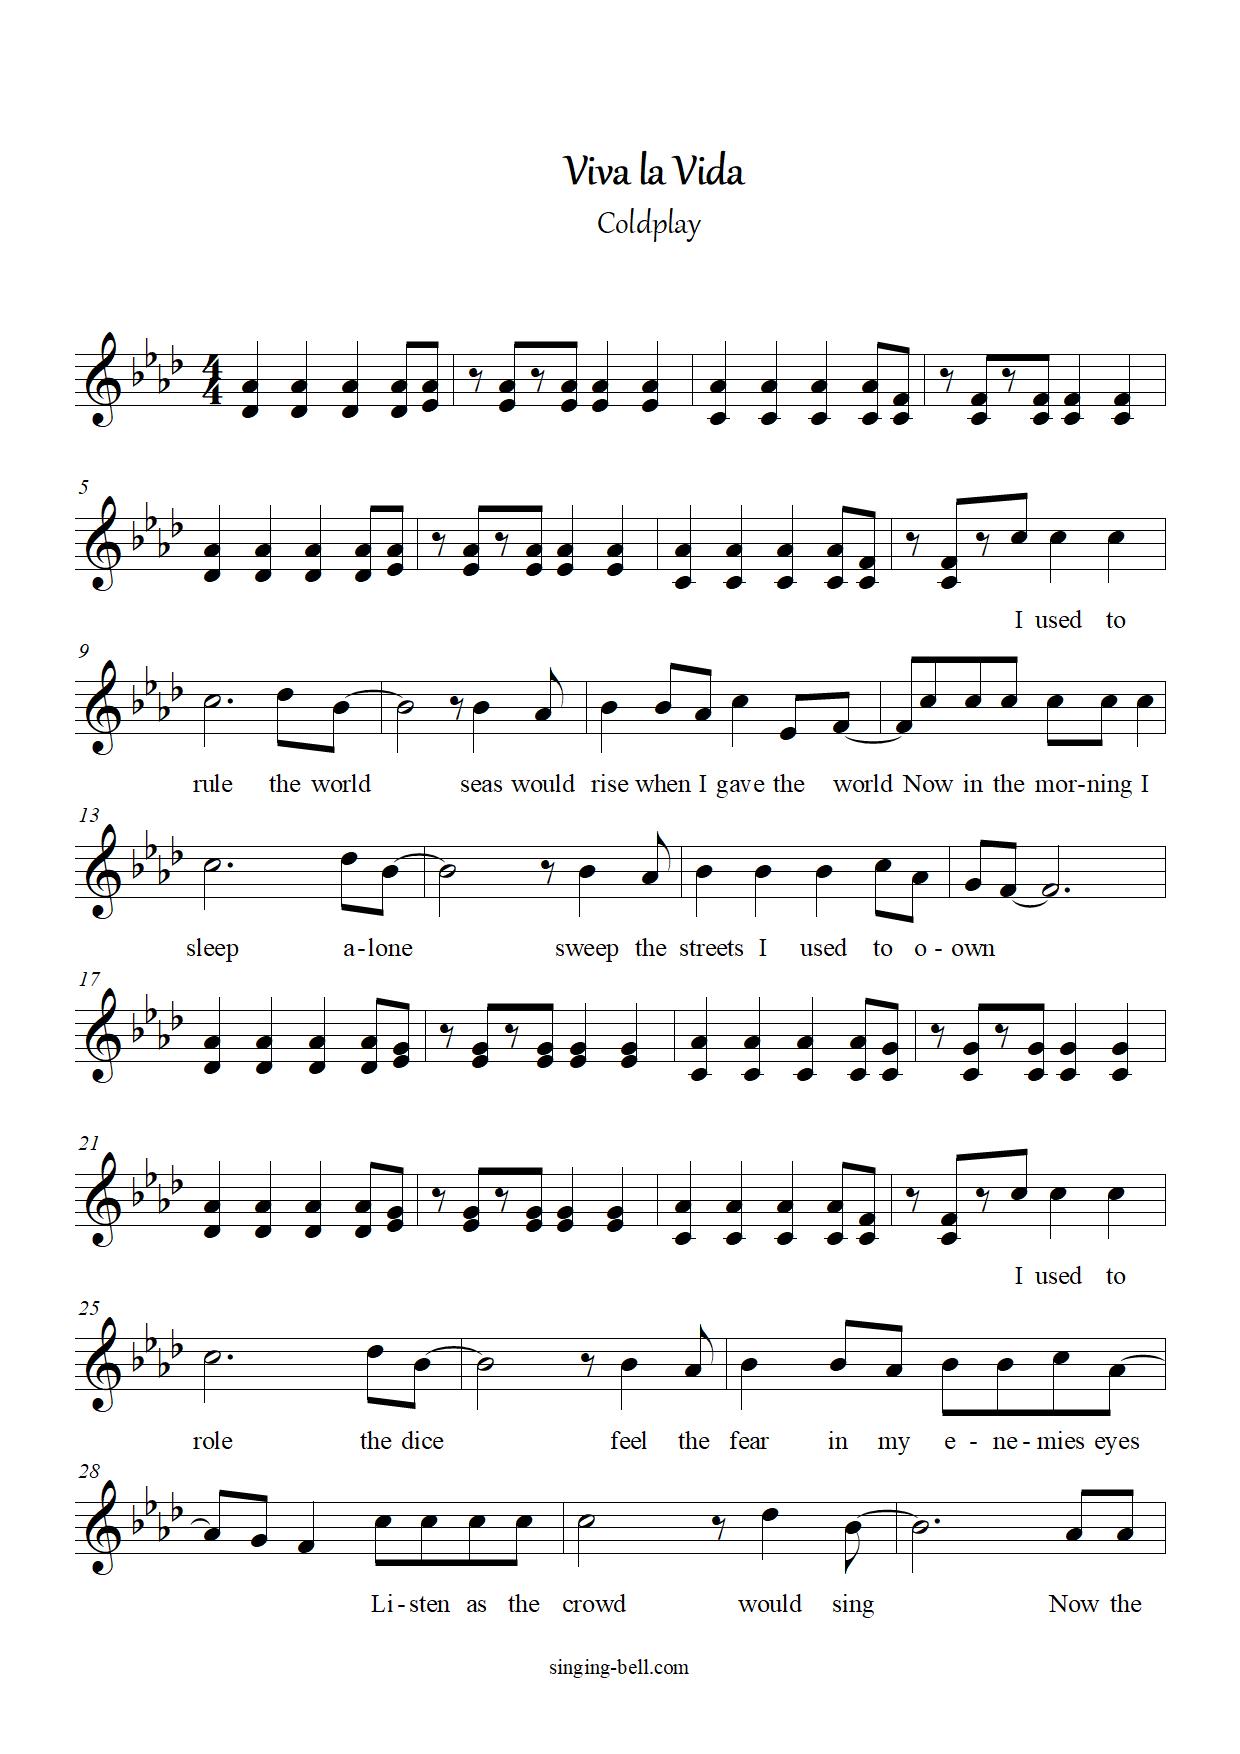 Viva la Vida free xylophone glockenspiel sheet music notes pdf page 1